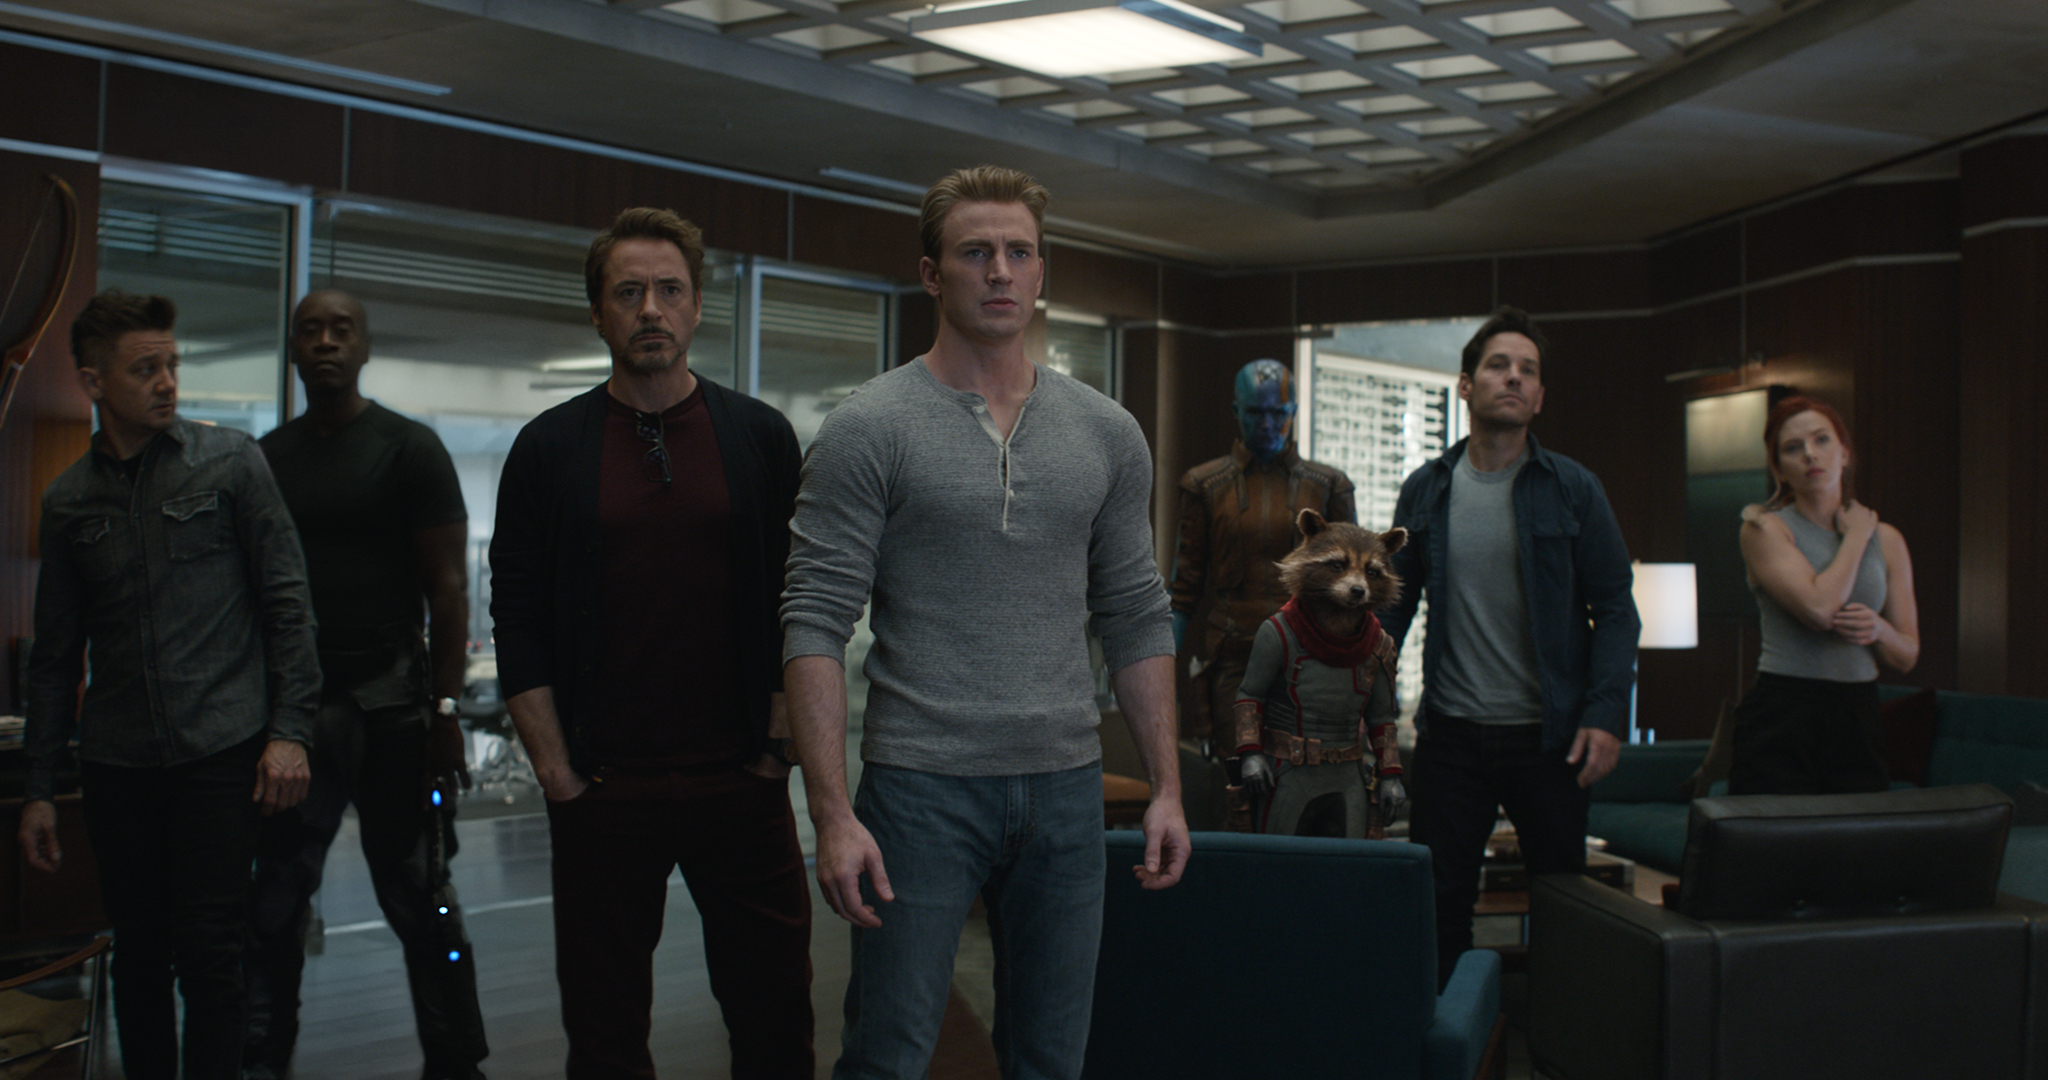 Marvel Cinematic Universe At Comic Con: Avengers Unite